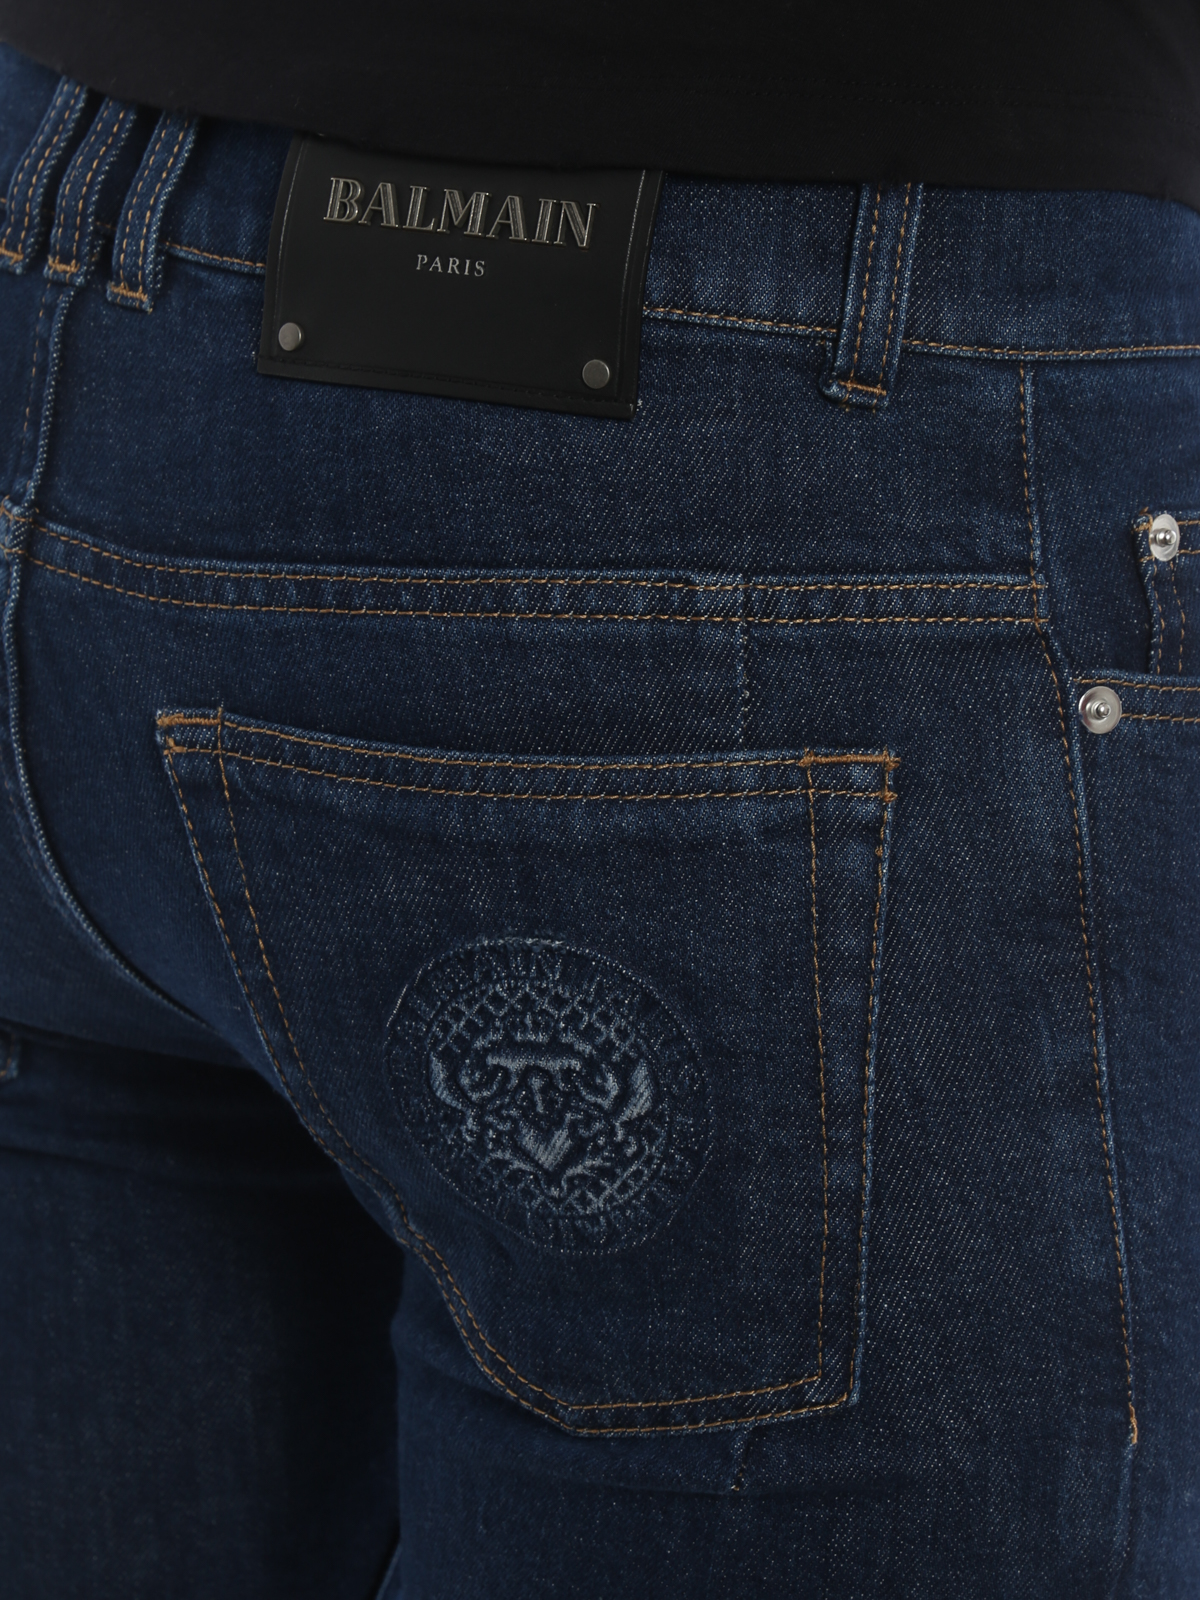 balmain logo jeans